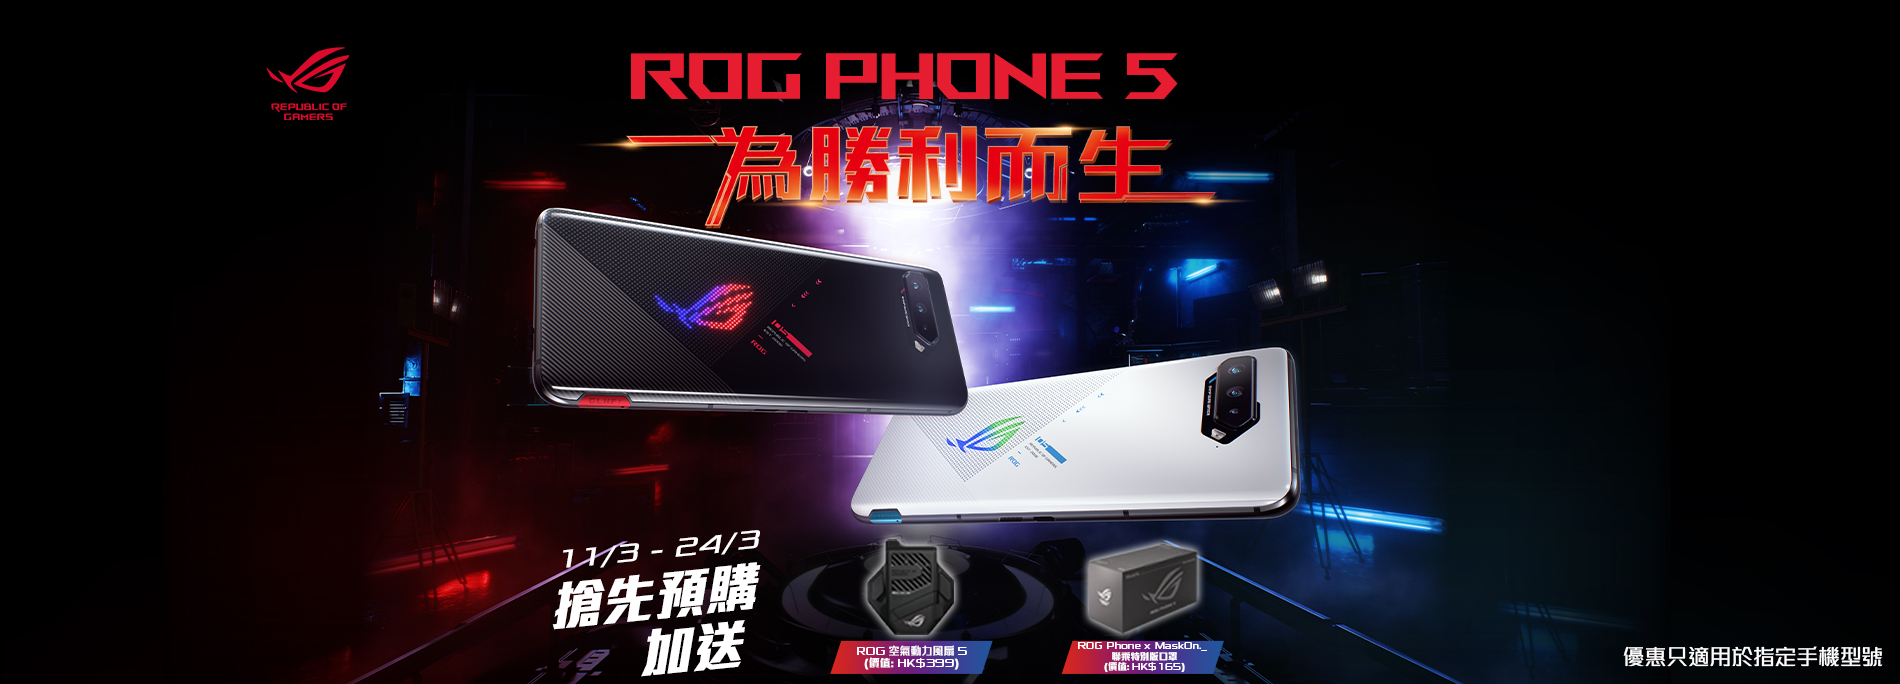 ROG Phone 5 預購限定優惠 (3月11日 - 3月24日)